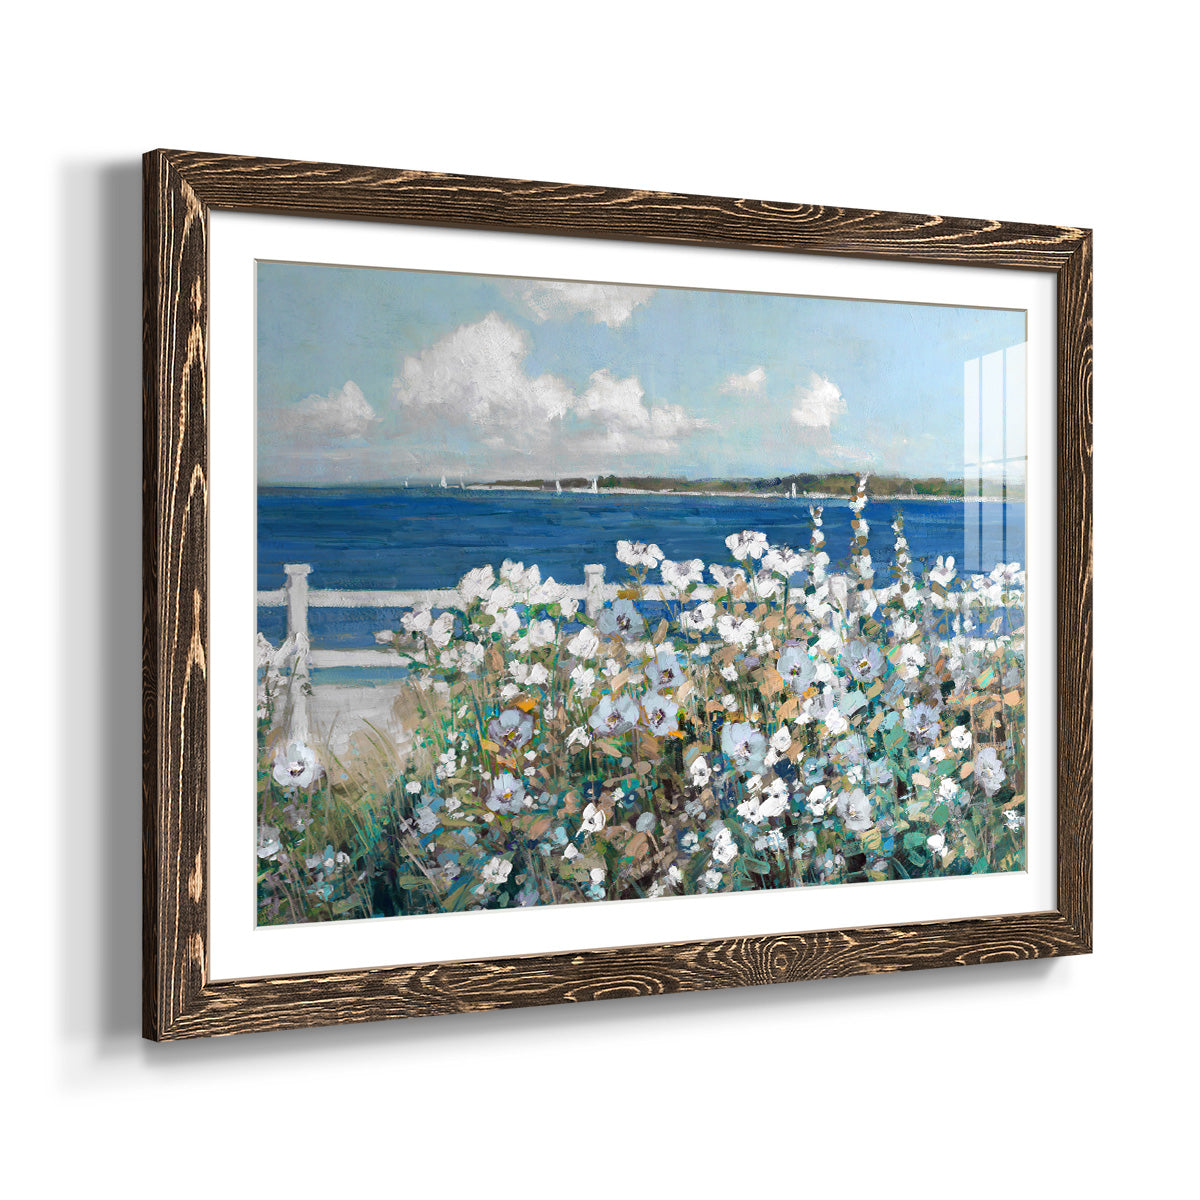 Bayside Garden-Premium Framed Print - Ready to Hang